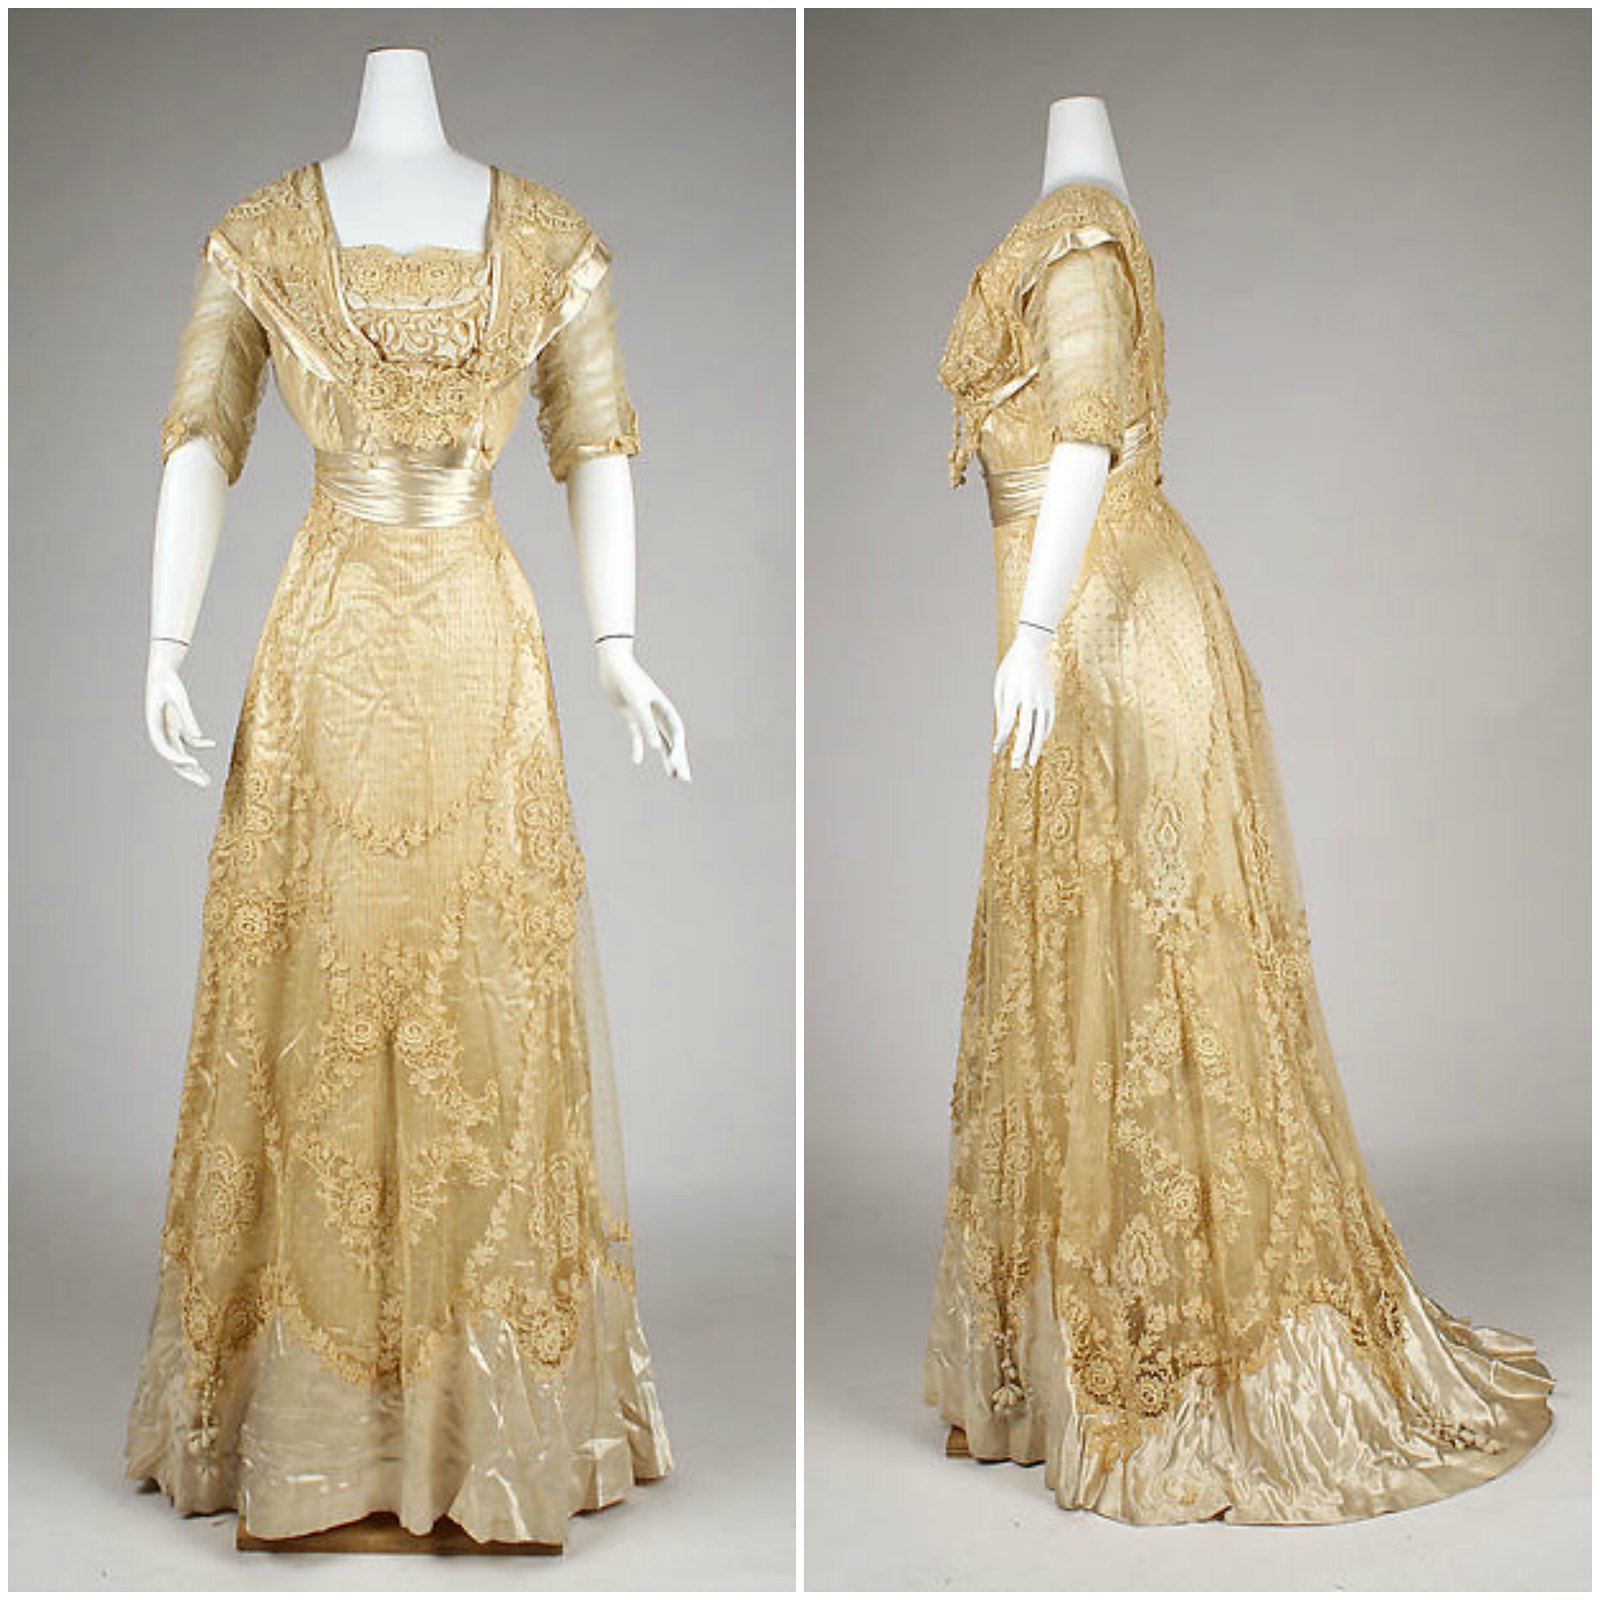 1908 Ball gown. American. Cotton, linen, silk. metmuseum